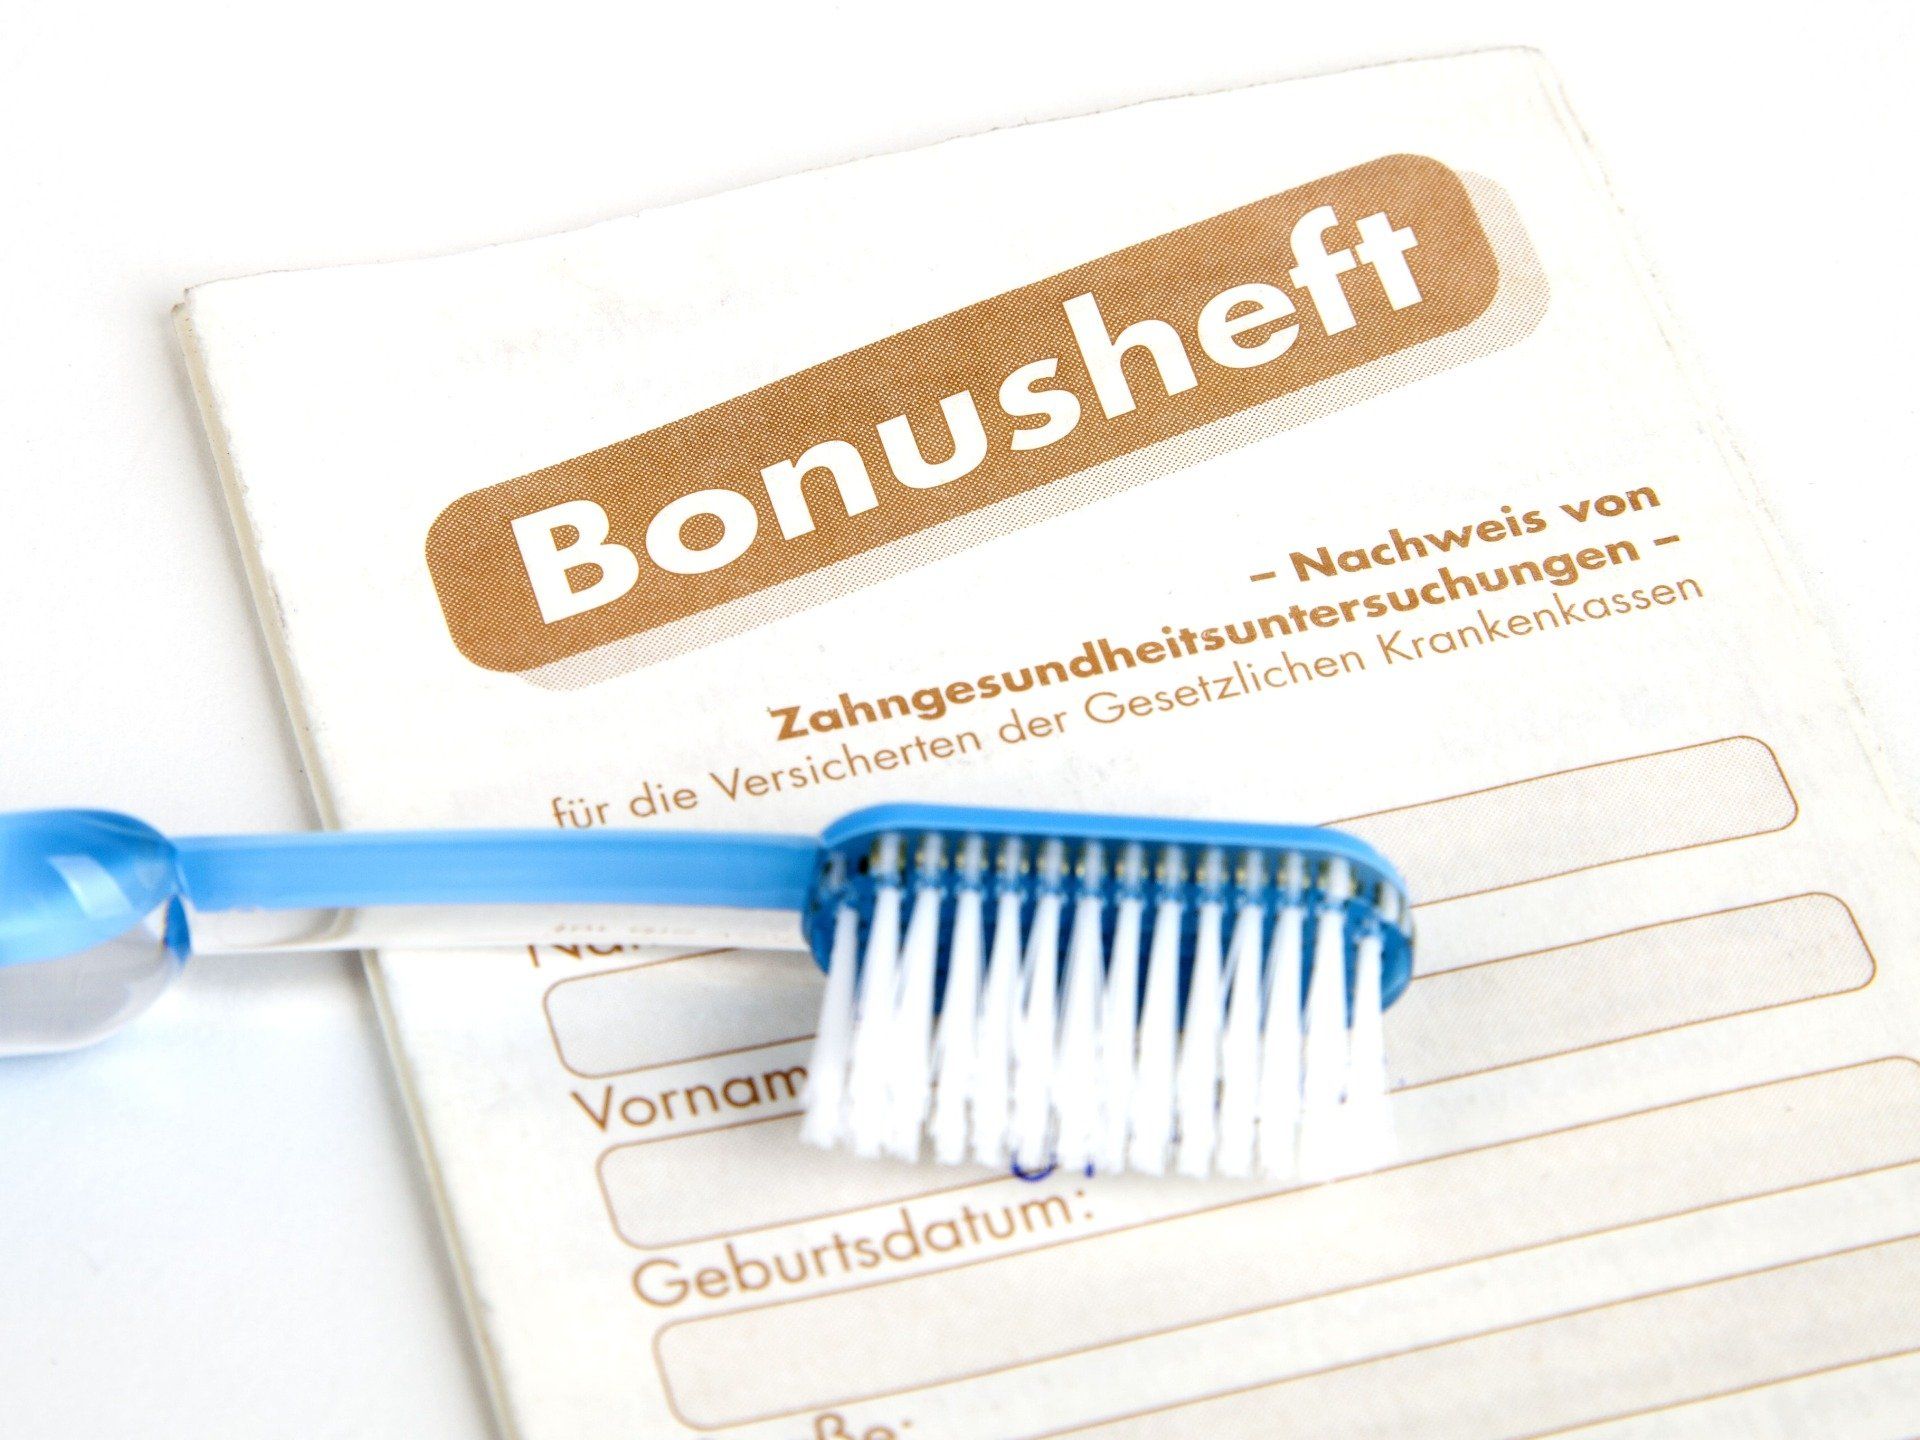 Bonusheft beim Zahnarzt in Berlin-Neukölln